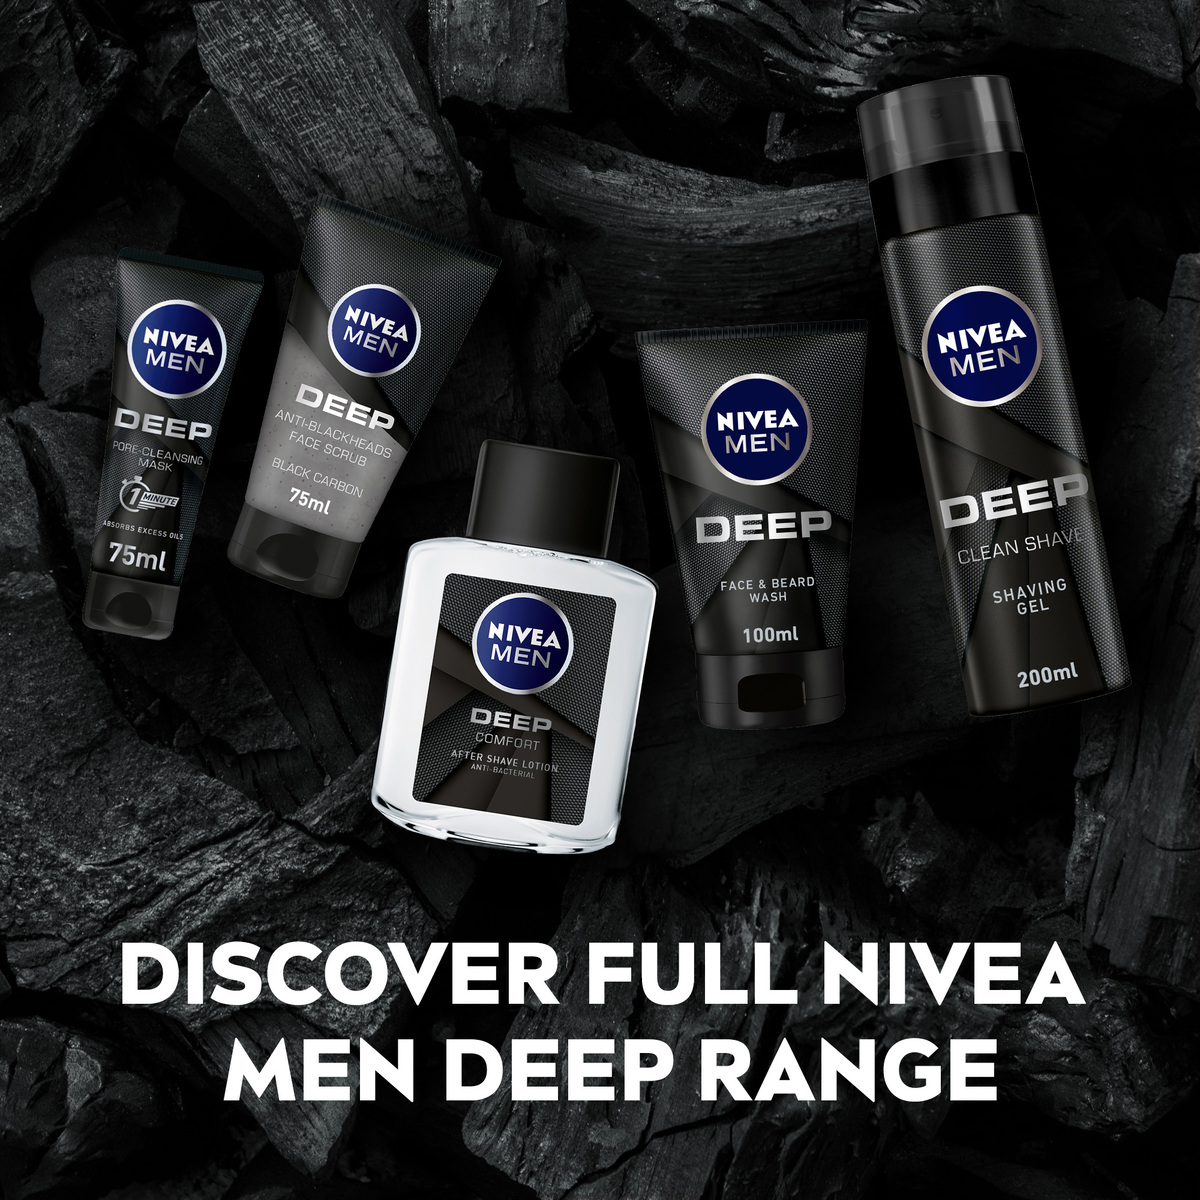 Nivea Men Deep Face & Beard Wash Black Carbon 100 ml